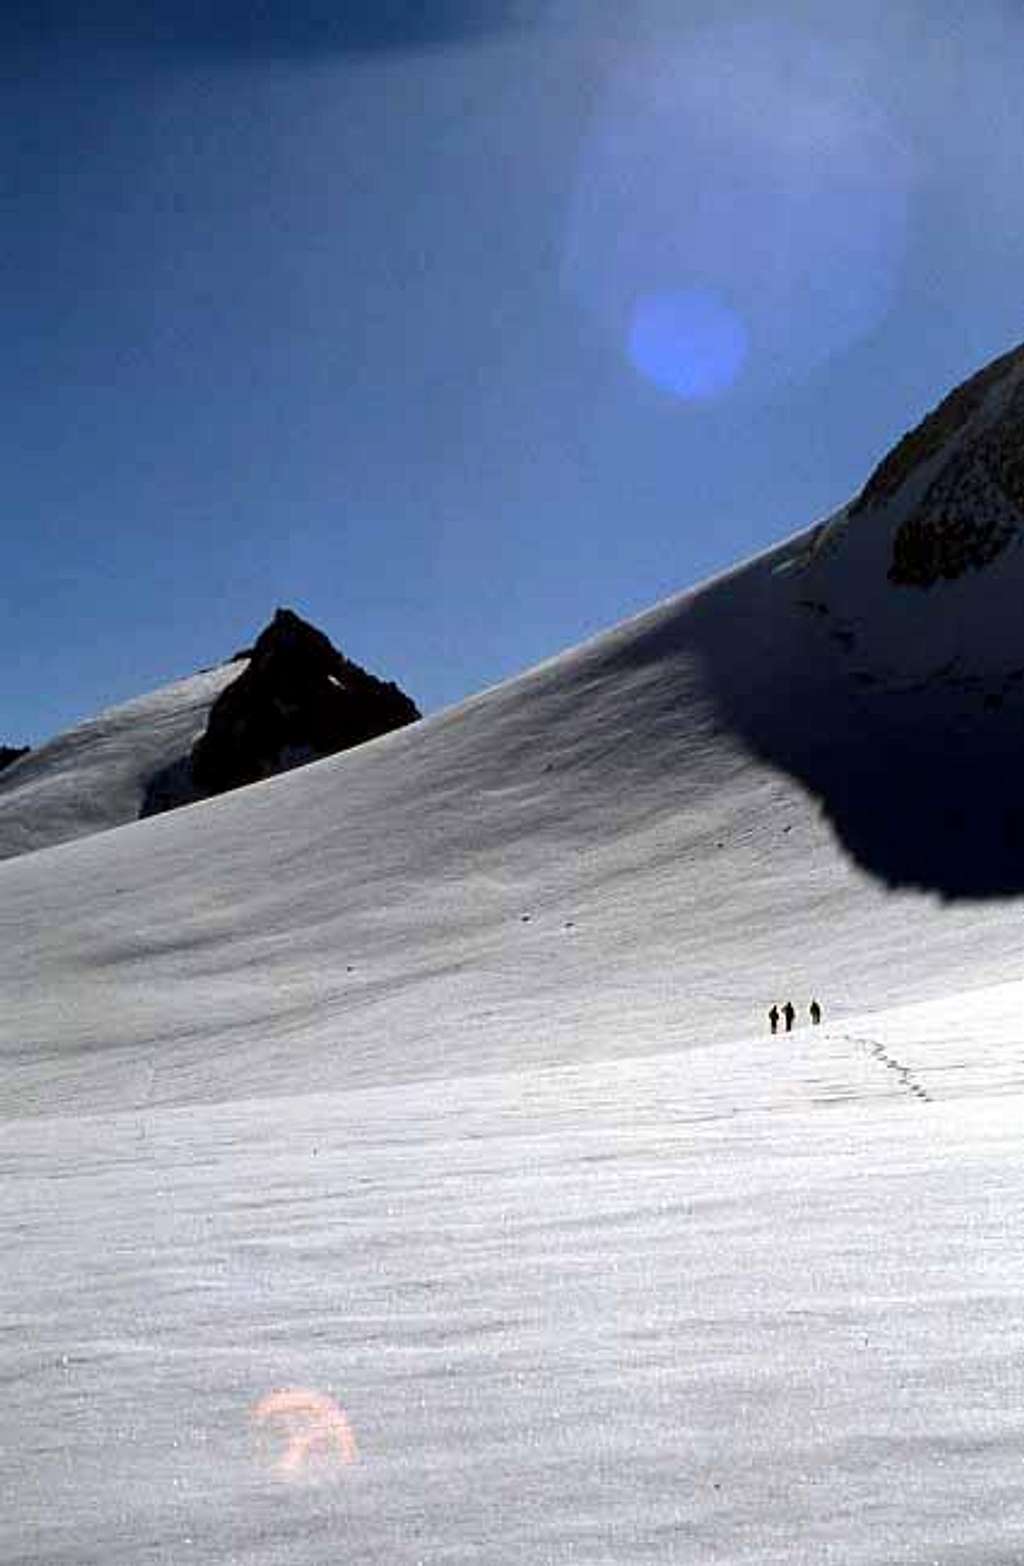 Monte Mandron from Passo Venerocolo.